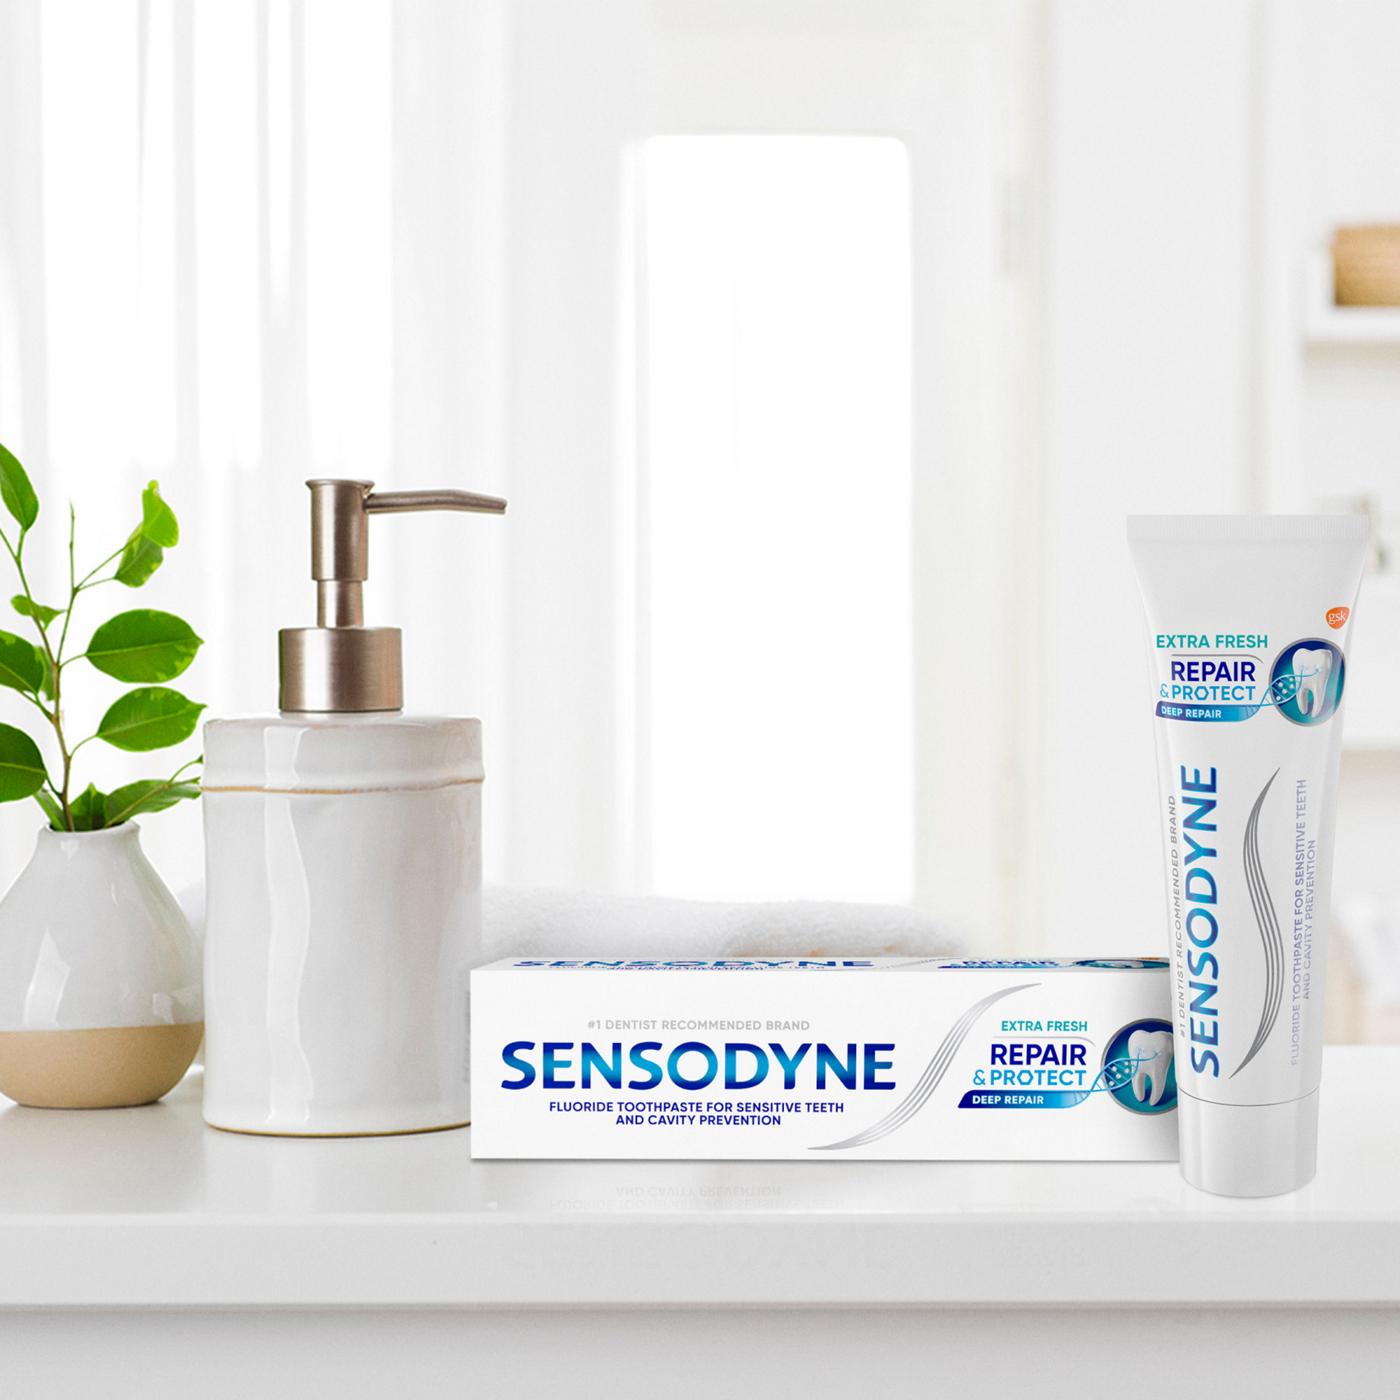 Sensodyne Sensitive Repair & Protect Toothpaste - Extra Fresh; image 4 of 7